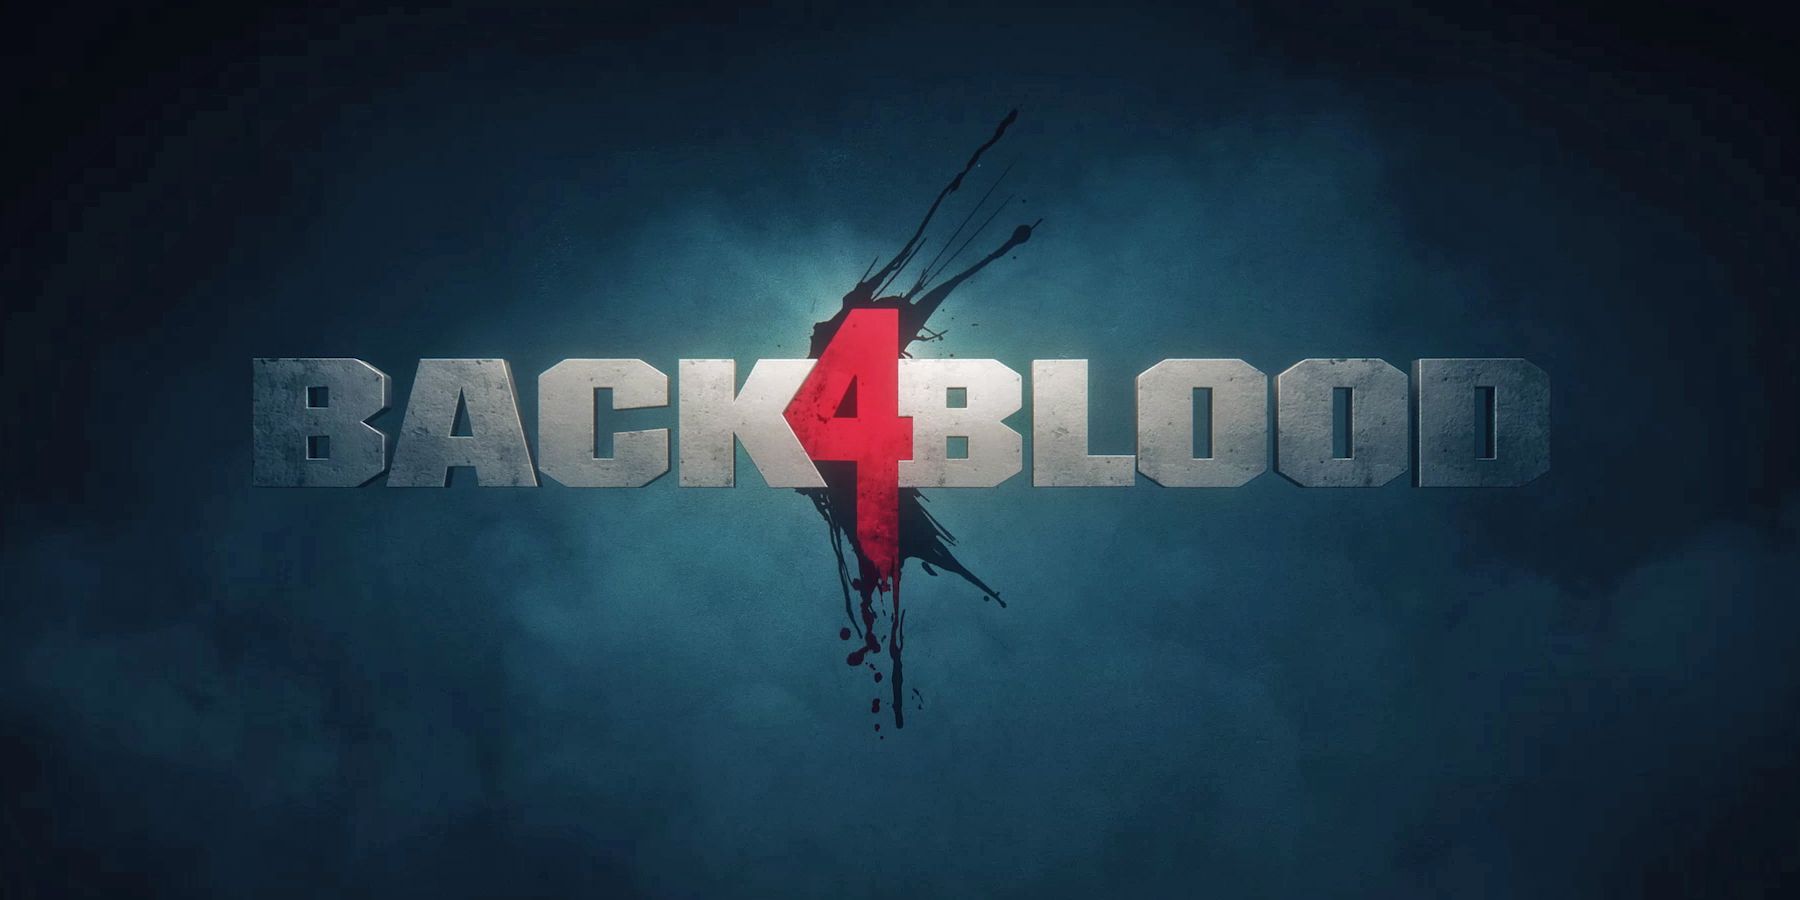 Back 4 Blood review – Rip-roaring Left 4 Dead successor balances